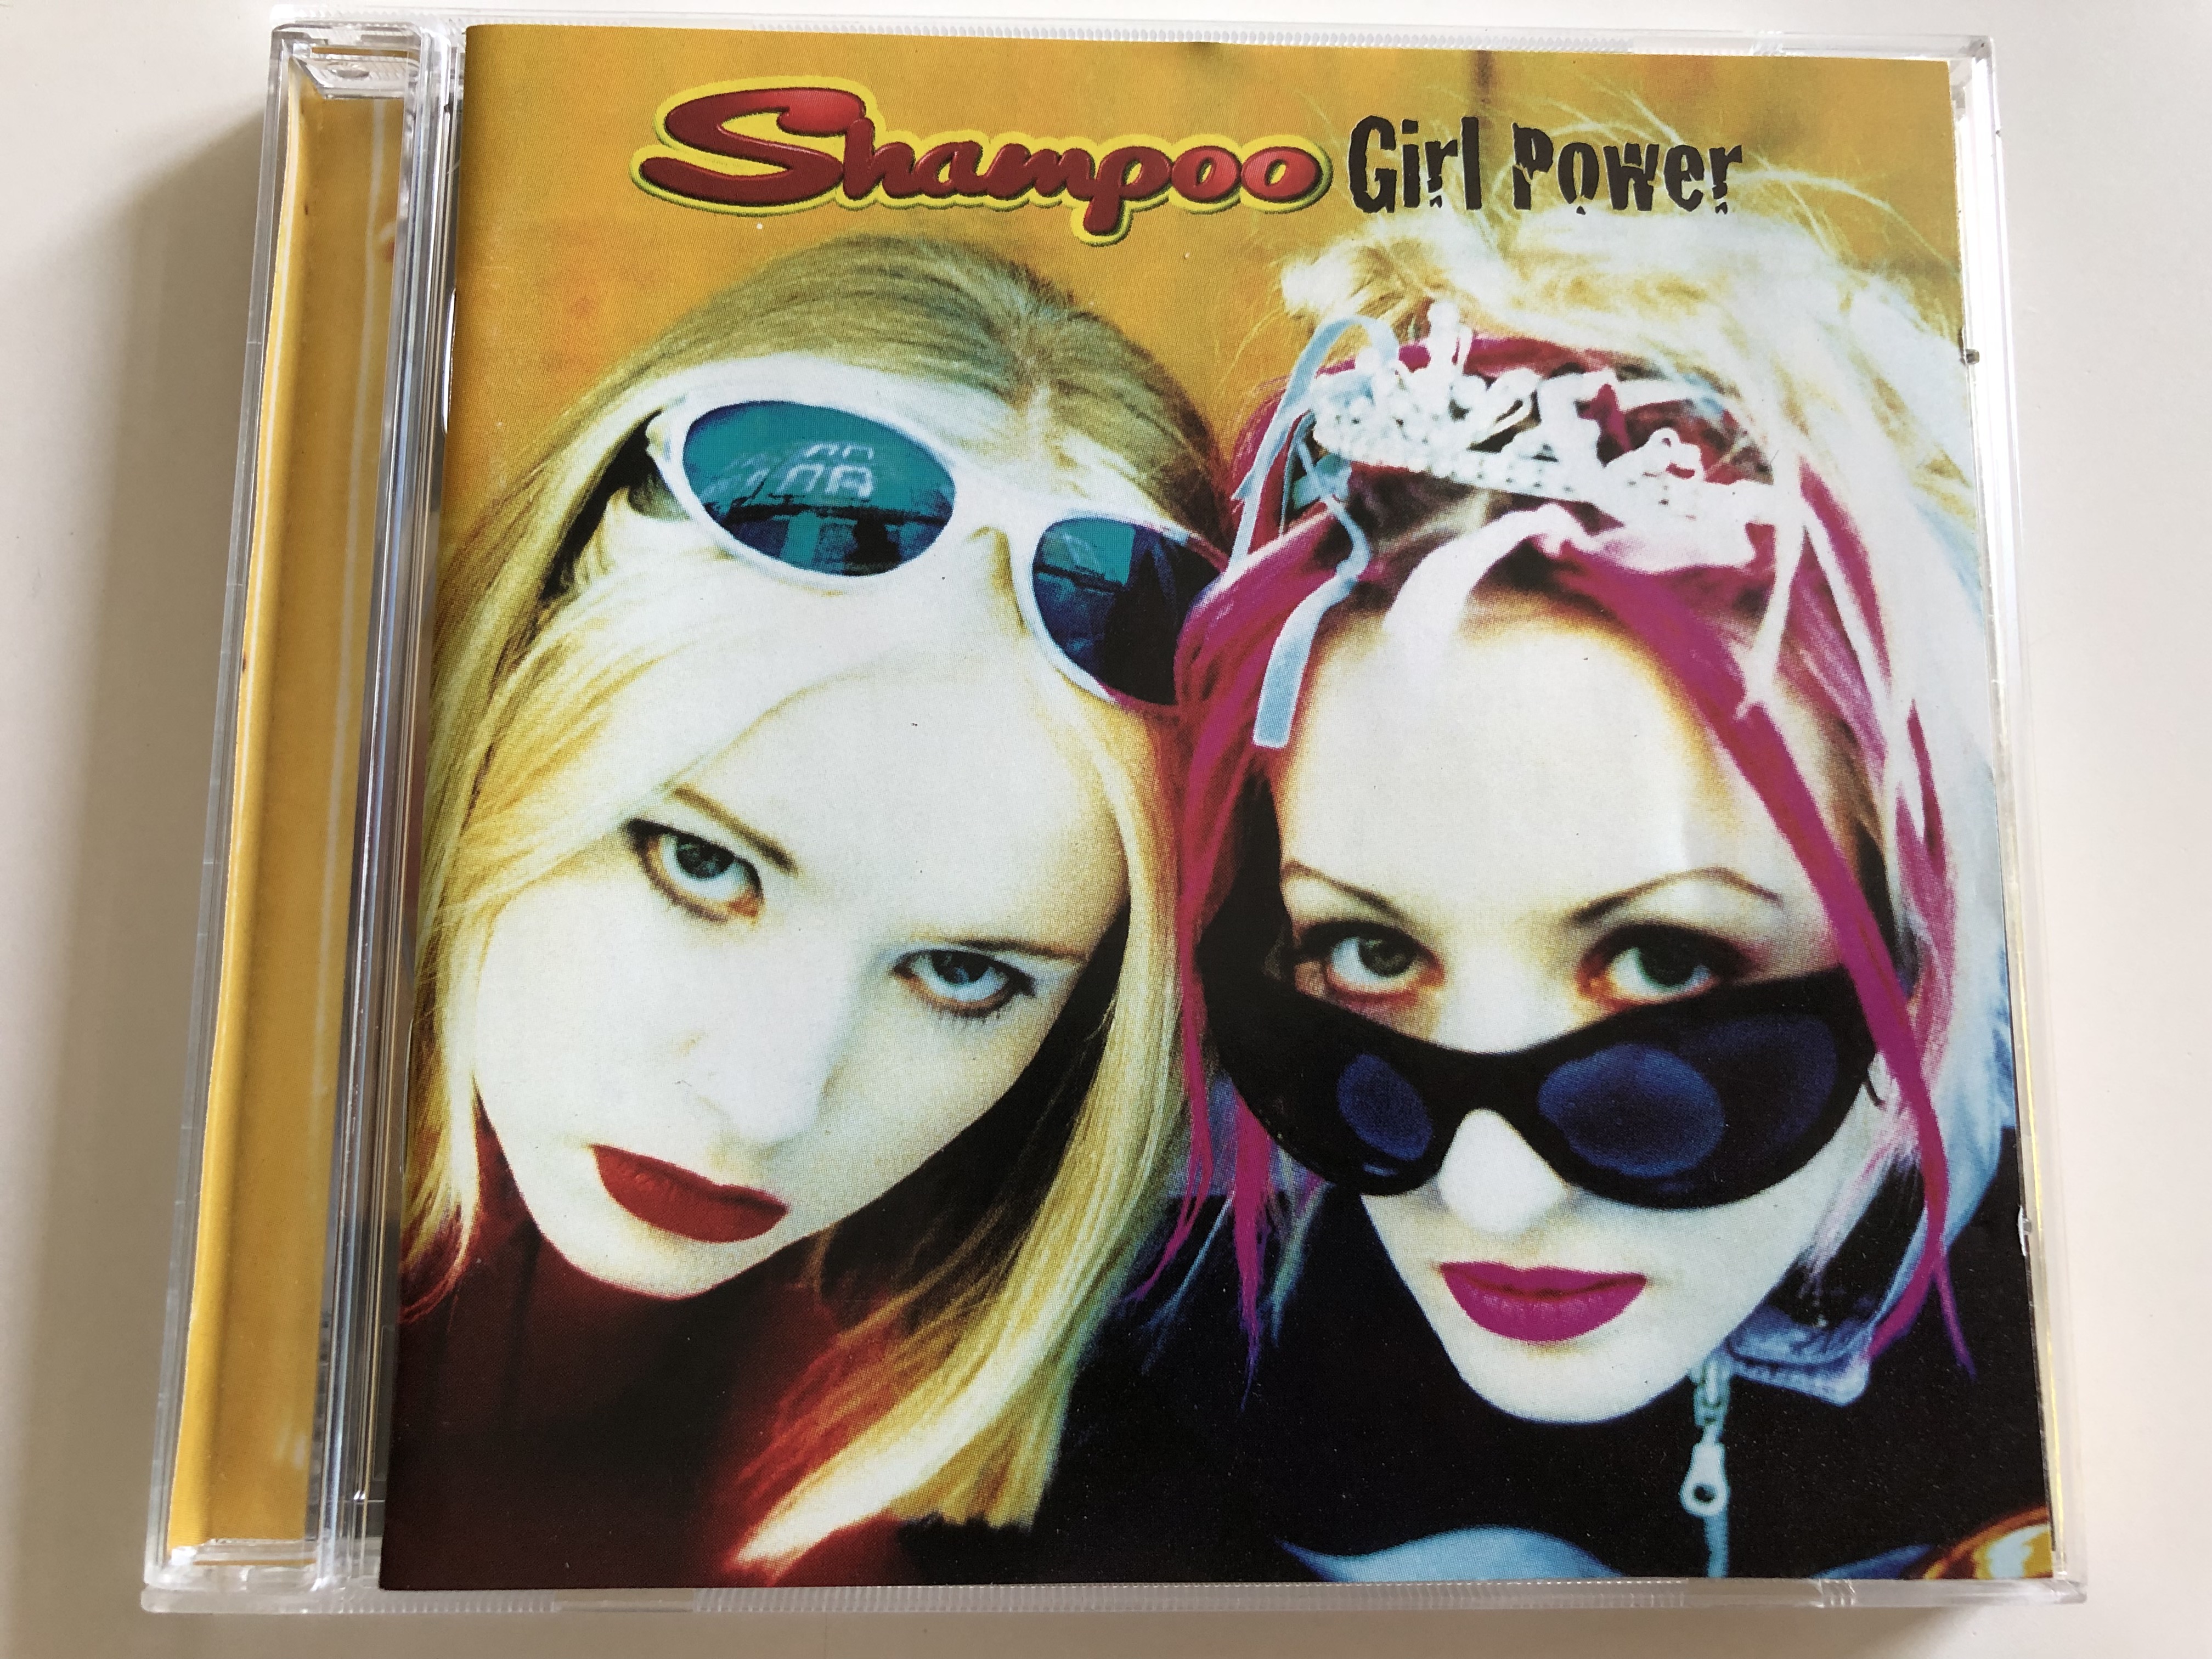 shampoo-girl-power-news-flash-bare-knuckle-girl-you-love-it-audio-cd-1995-1-.jpg